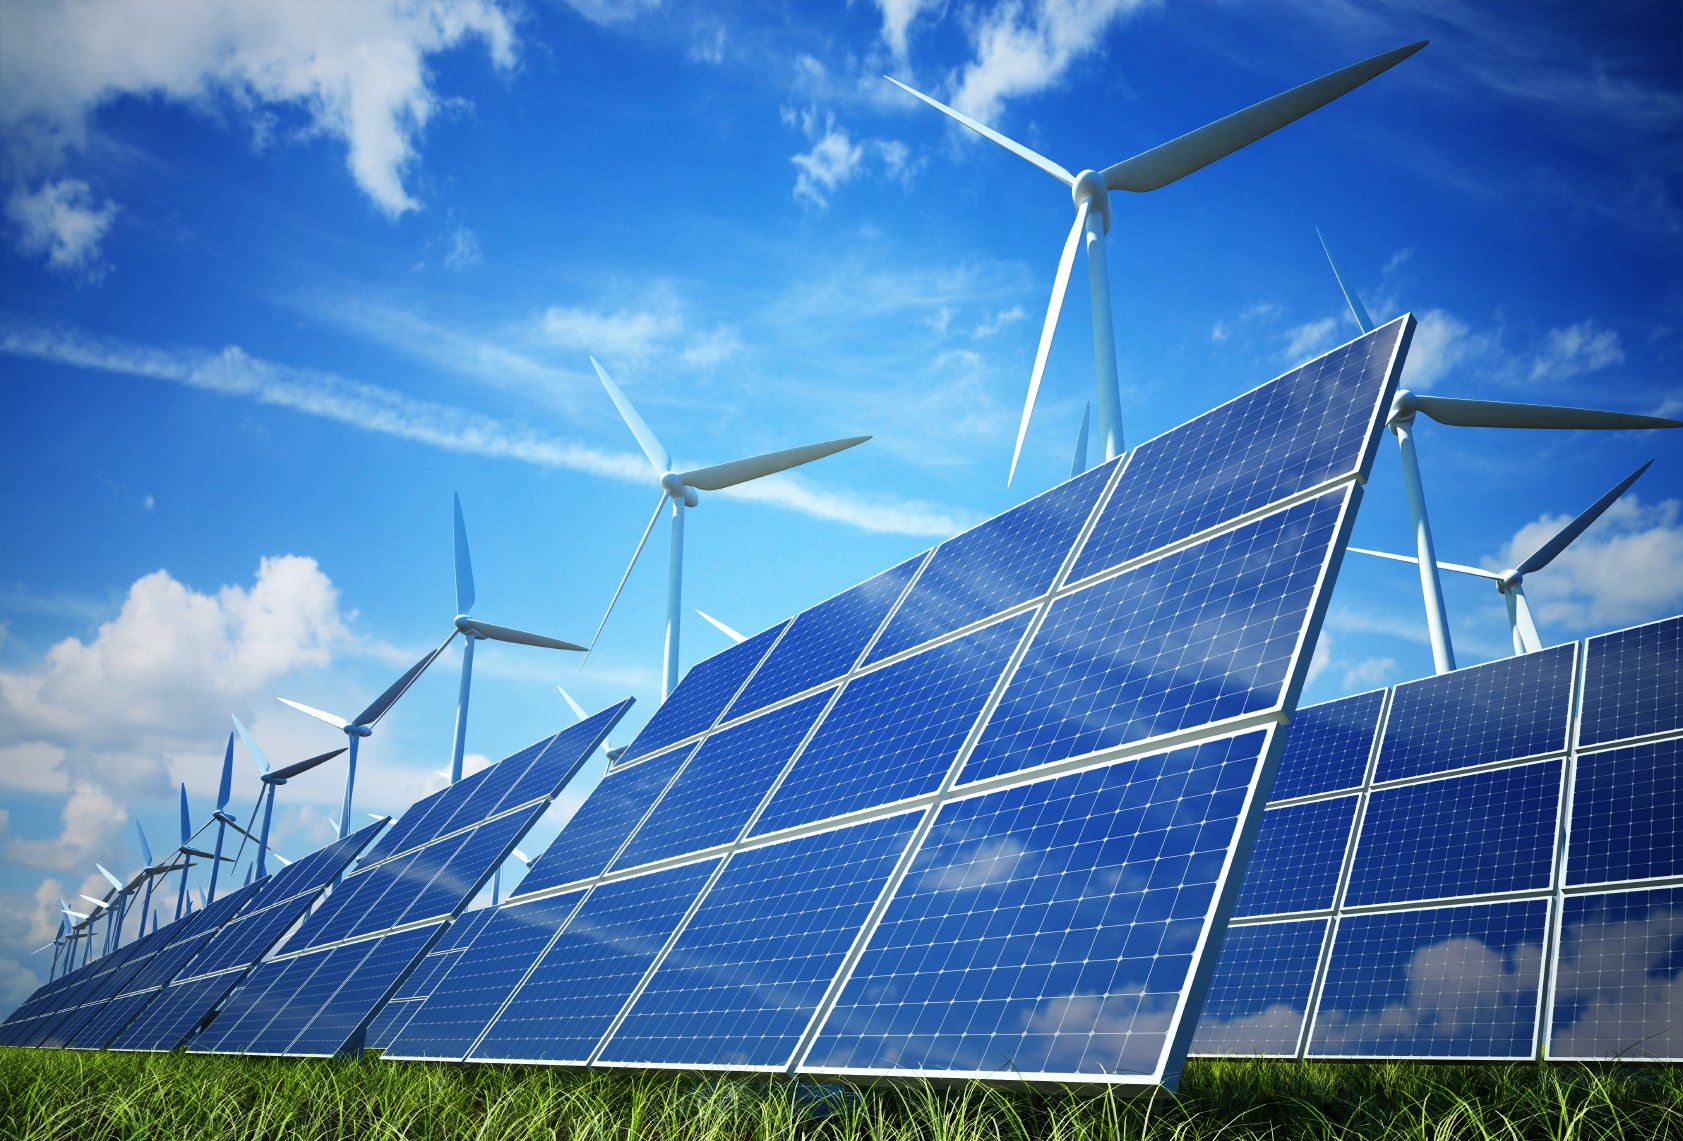 More information about "Τεχνολογικά εφικτό ενεργειακό μείγμα 100% Ανανεώσιμων Πηγών Ενέργειας"